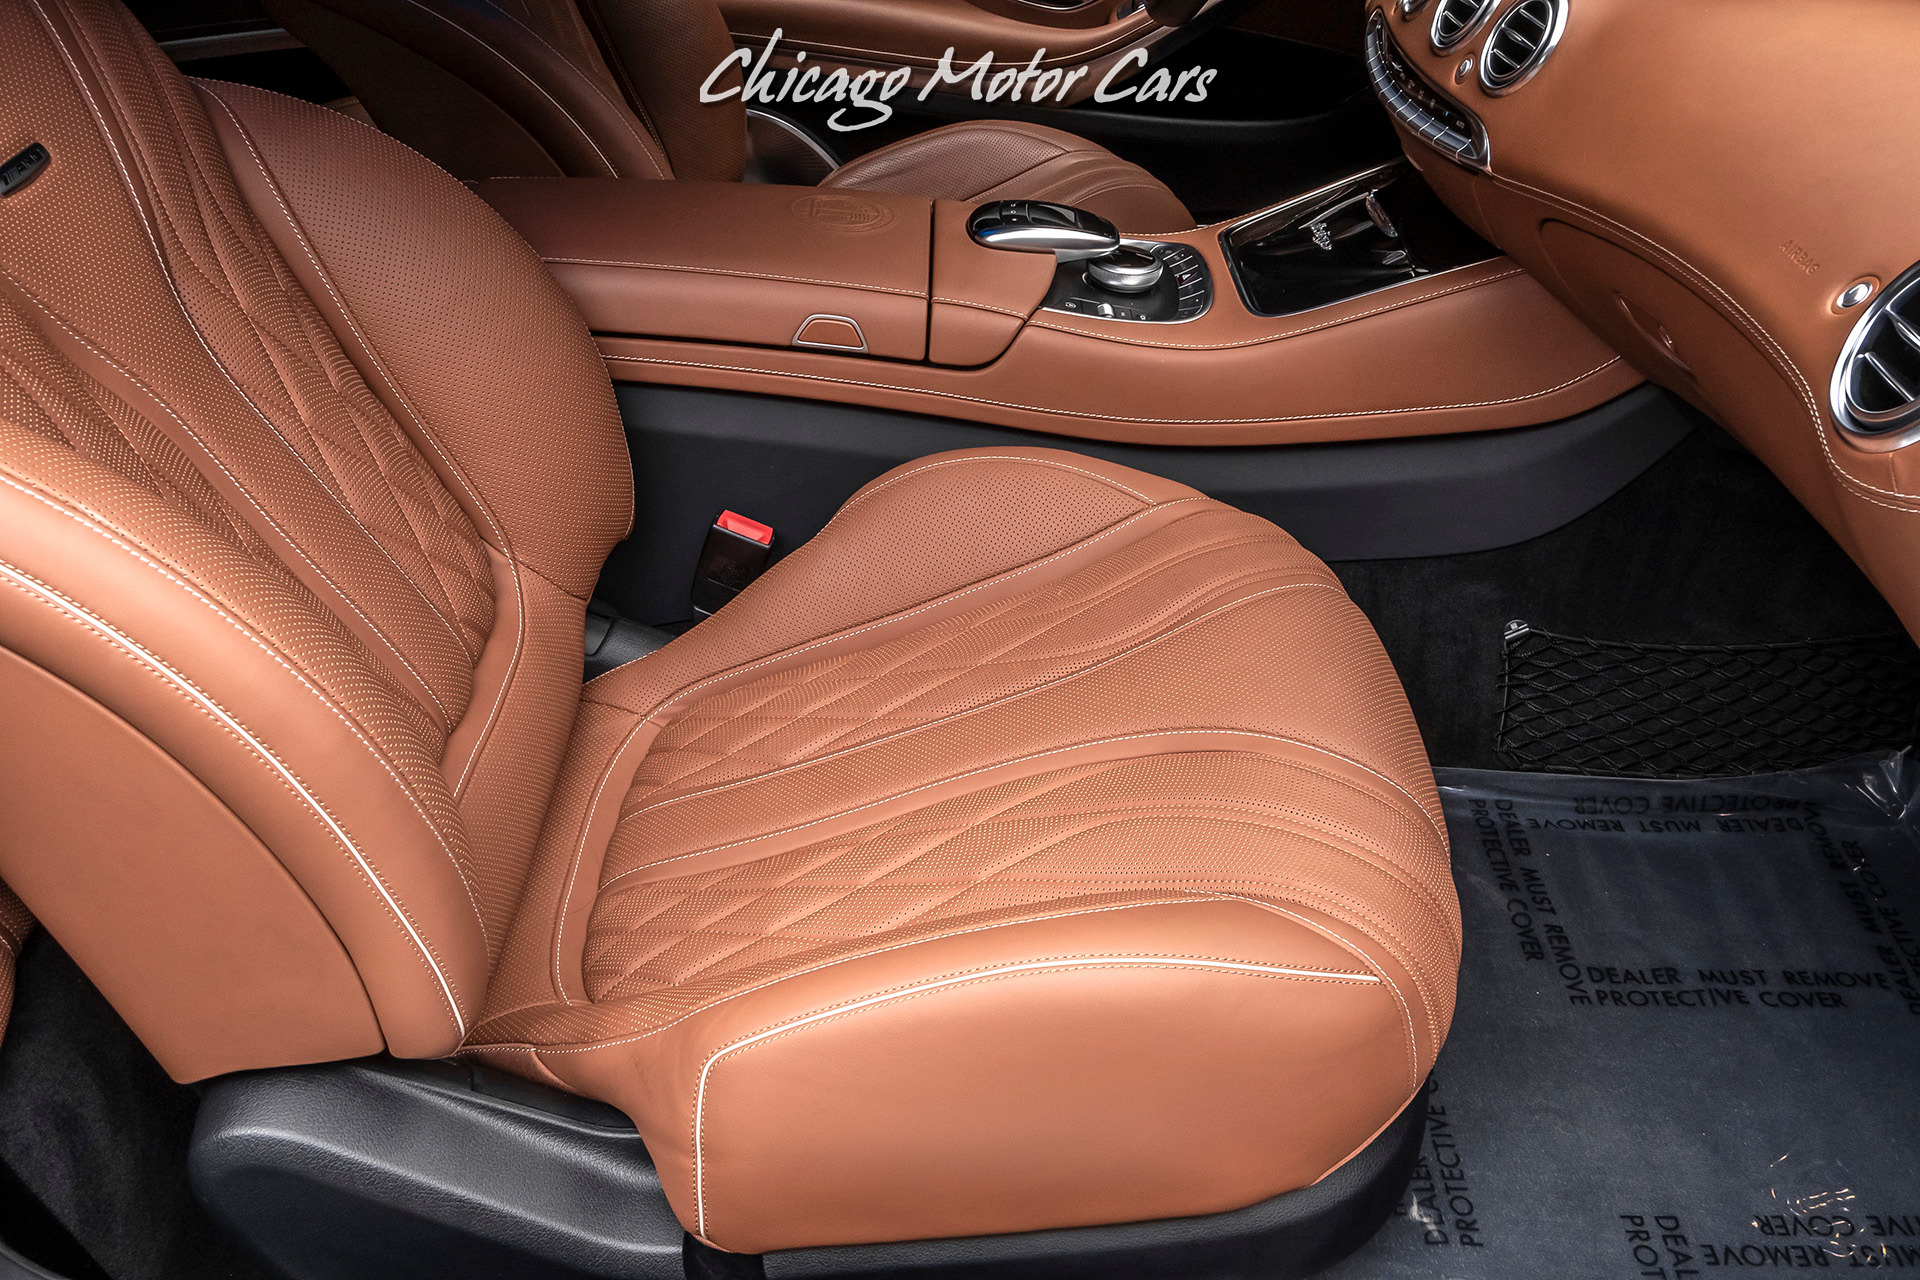 Original Smart 451 seat covers Passion black side airbag armrest ISOFIX